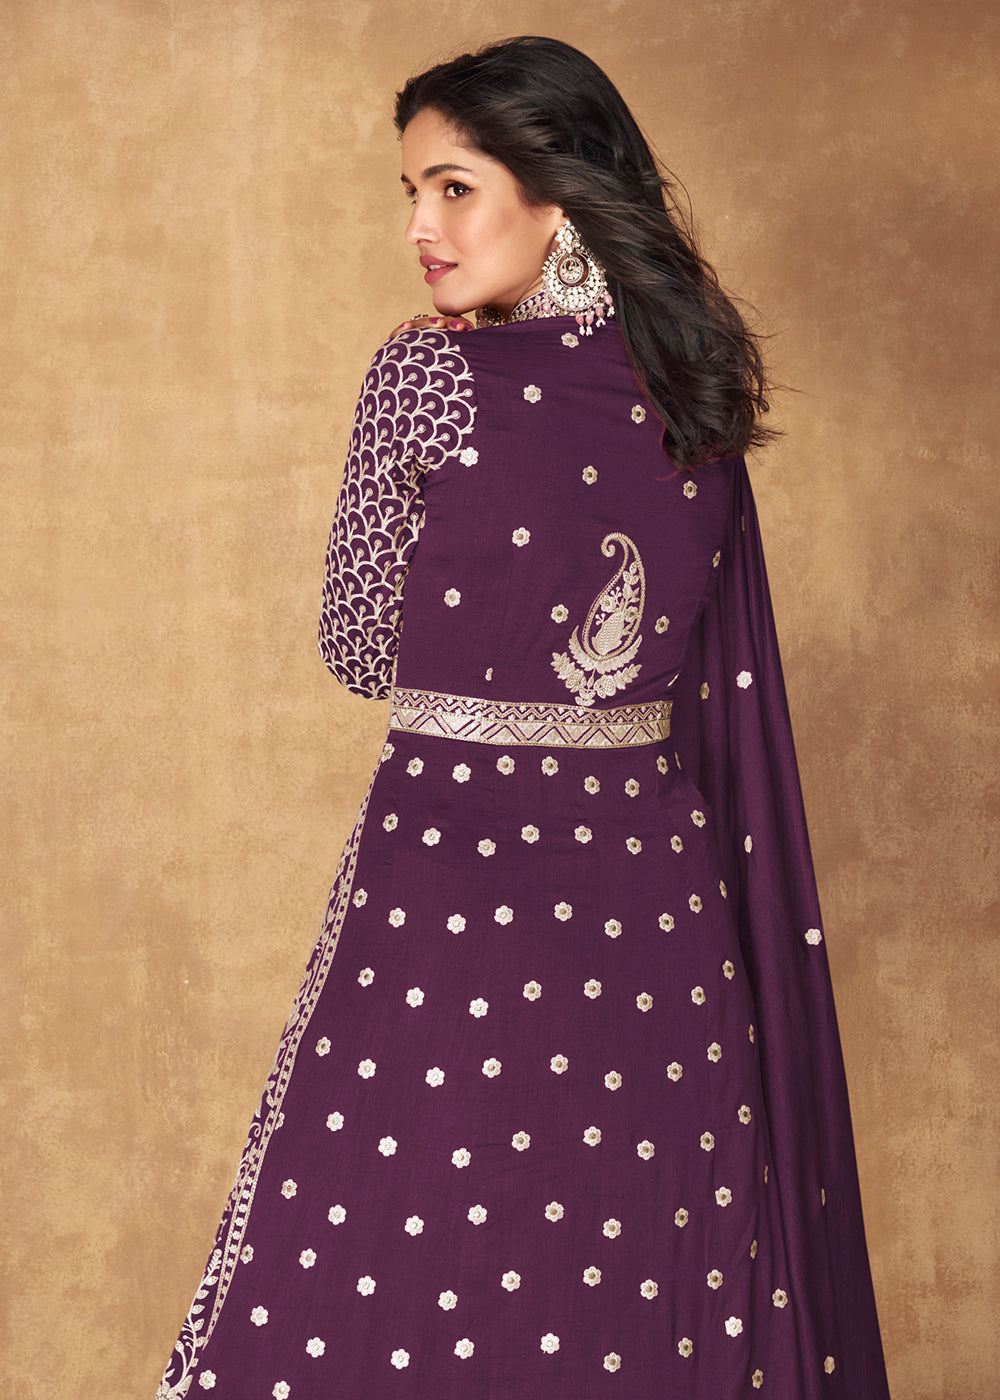 Buy Now Purple Slit Style Embroidered Lehenga Anarkali Suit Online in USA, UK, Australia, New Zealand, Canada & Worldwide at Empress Clothing.